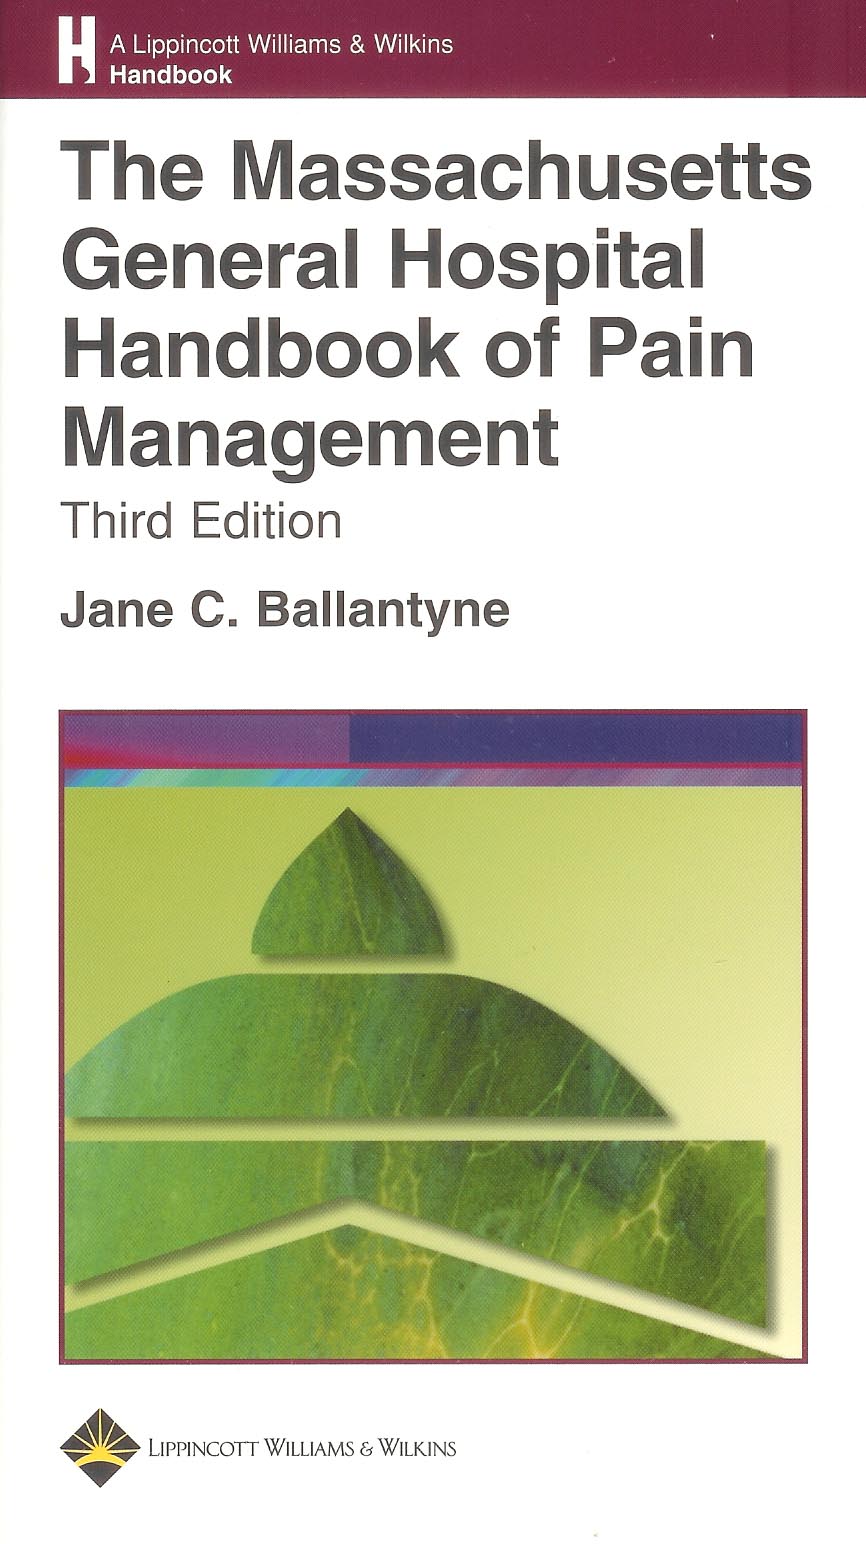 The Massachusetts General Hospital handbook of Pain Management